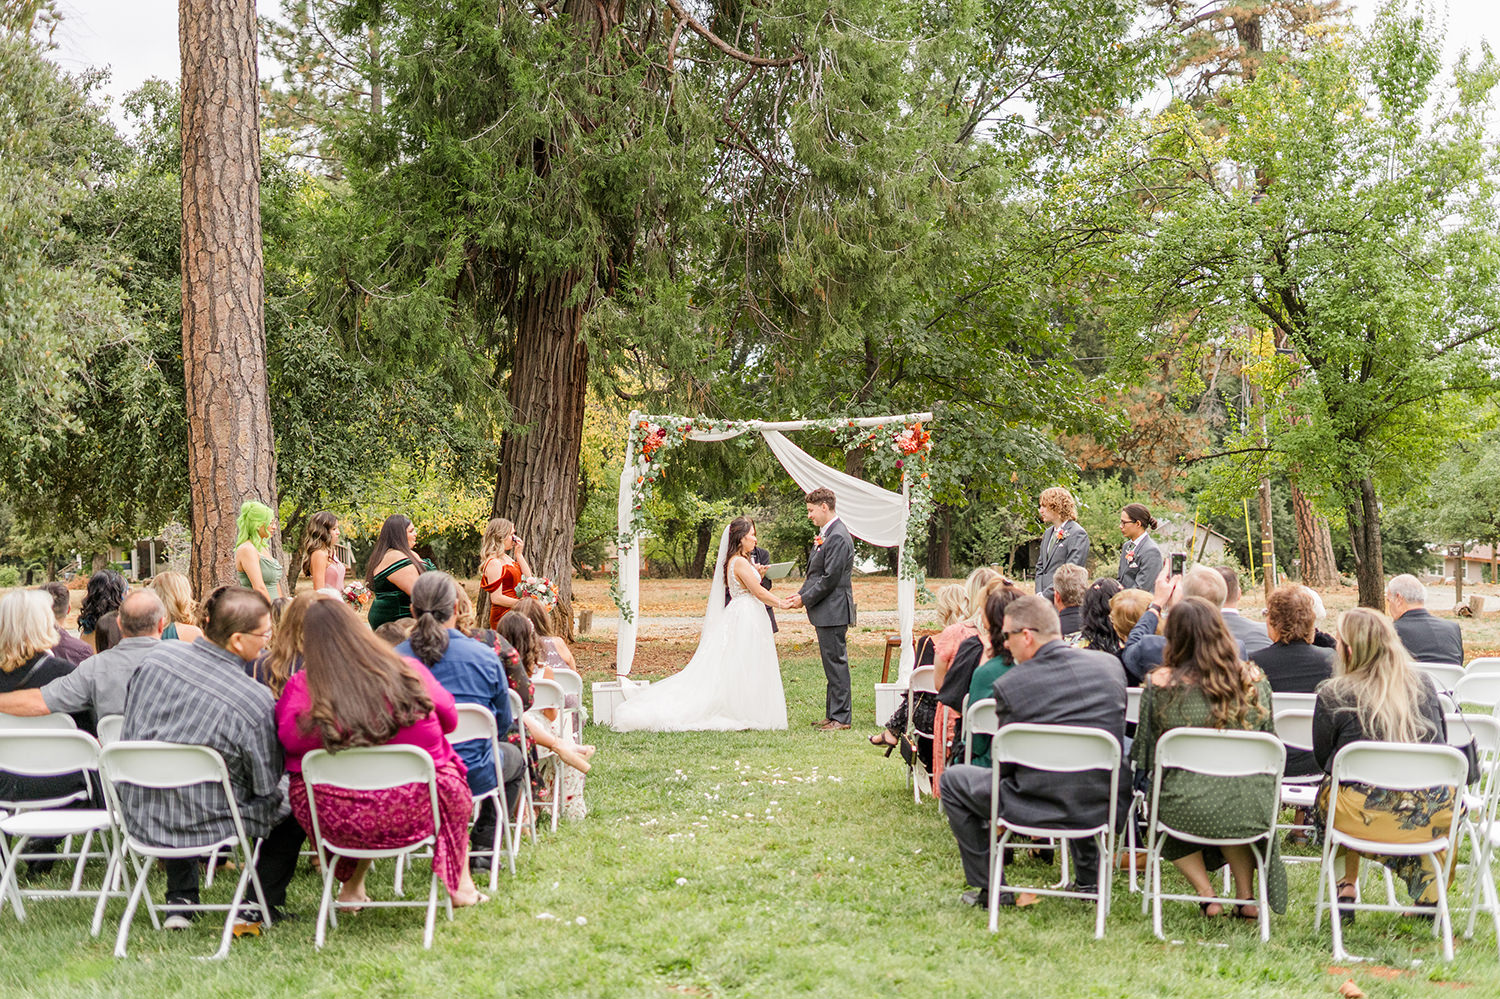 wedding ceremony photos at a northstar house wedding in nevada city california